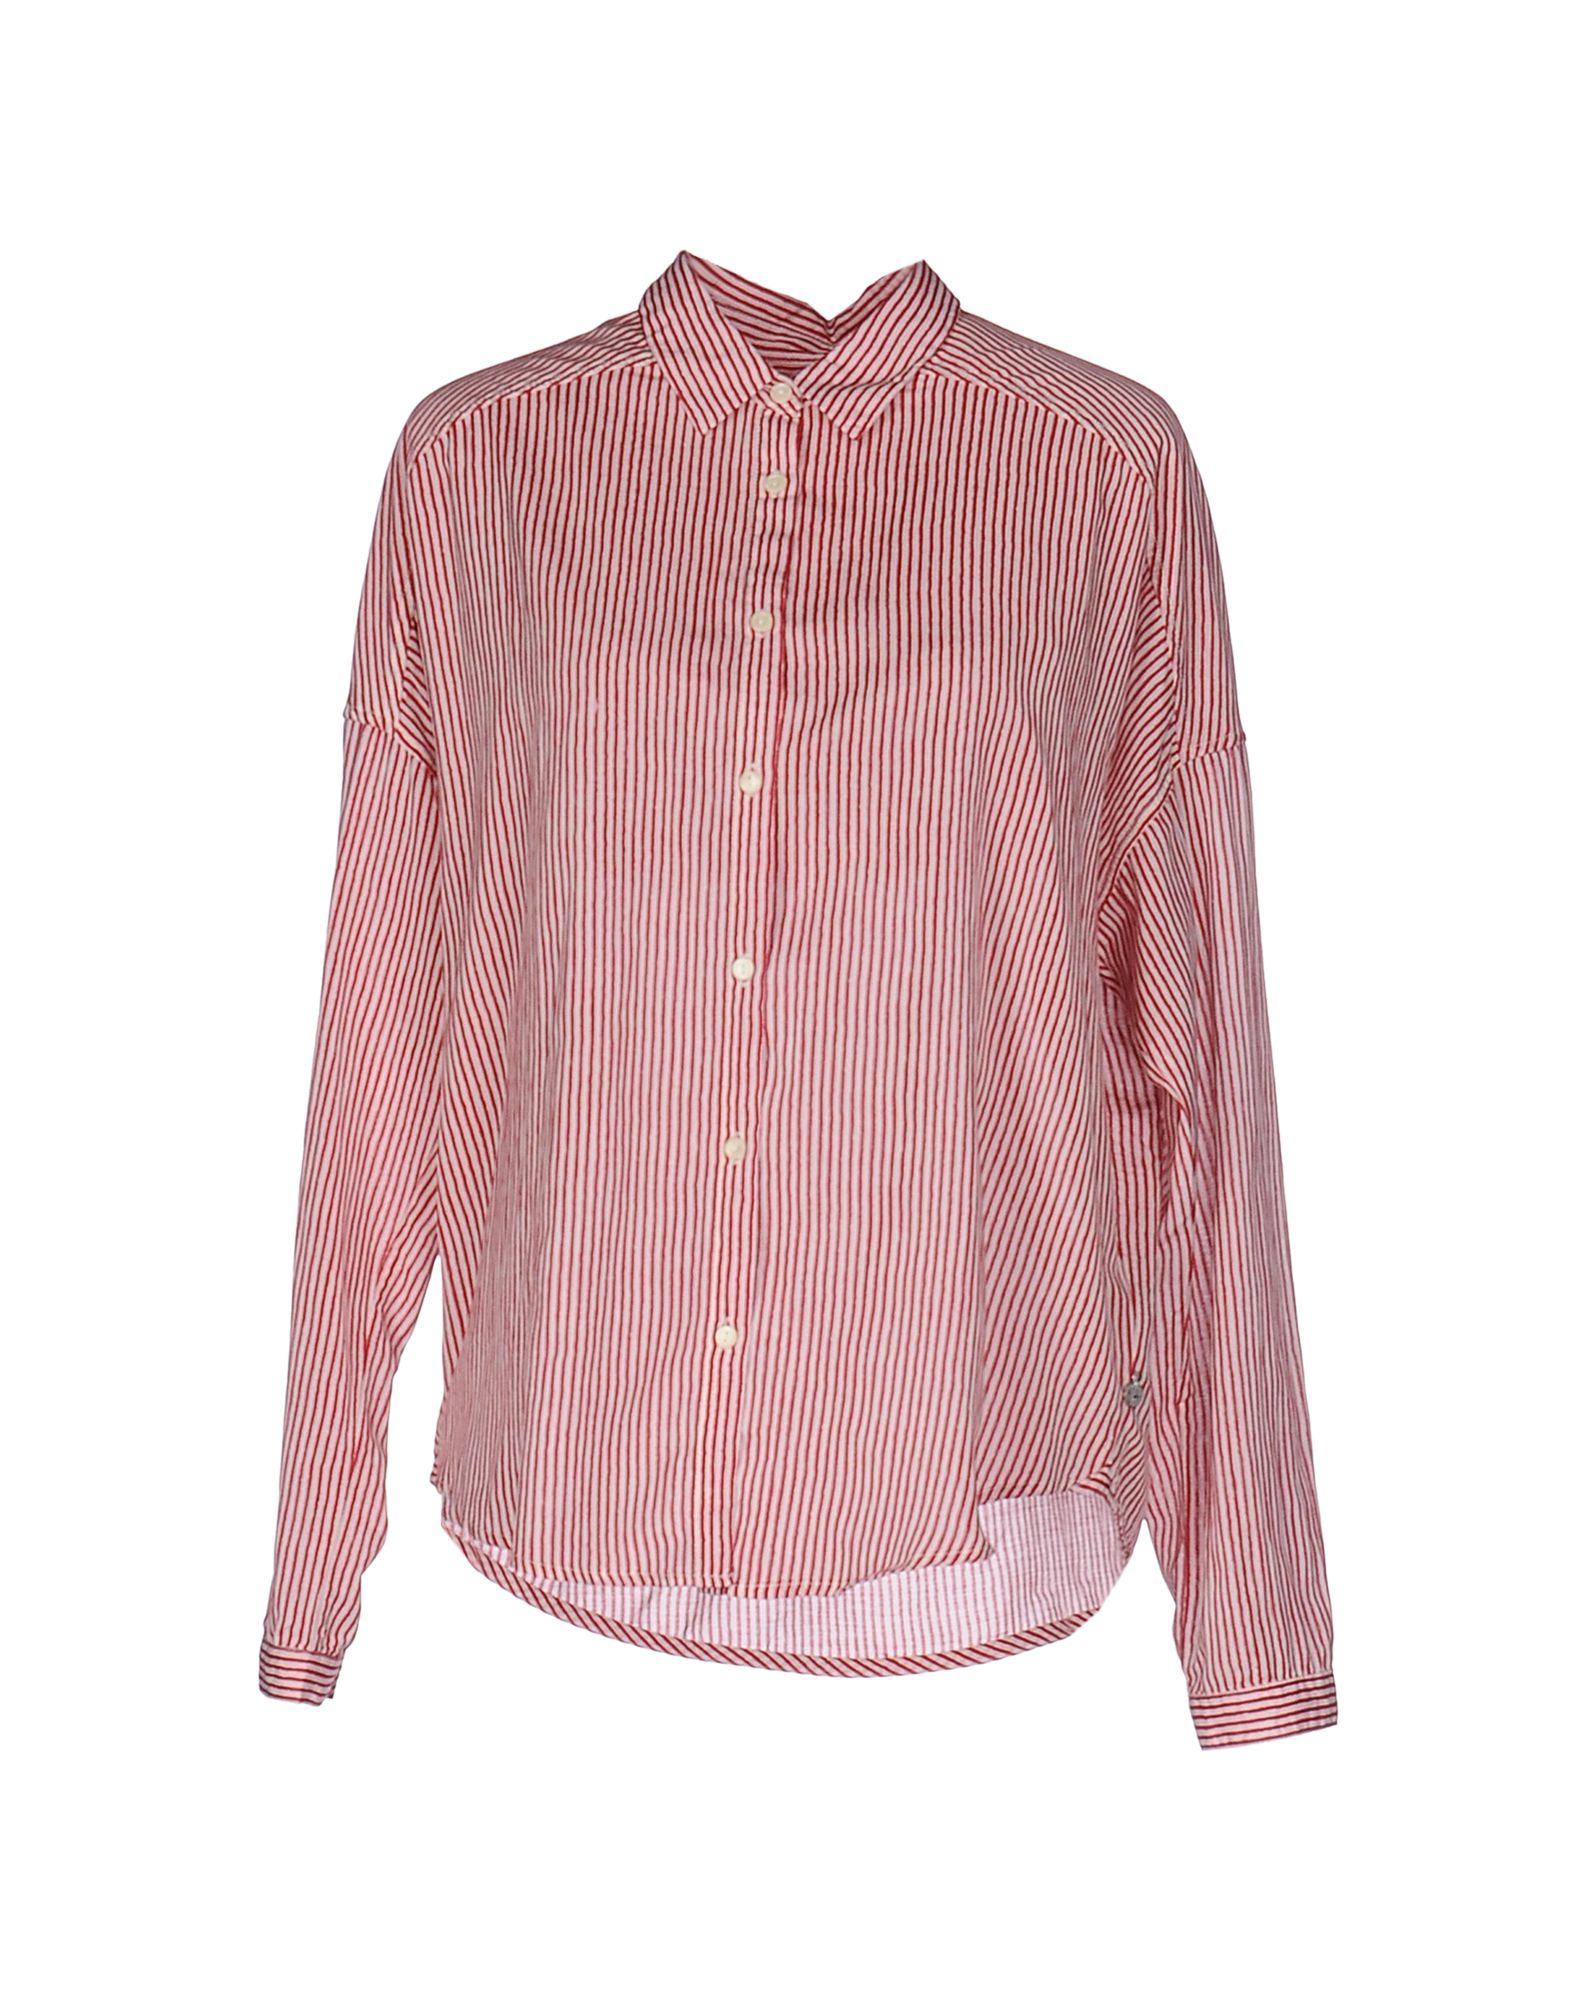 Lyst - Maison scotch Shirt in Pink